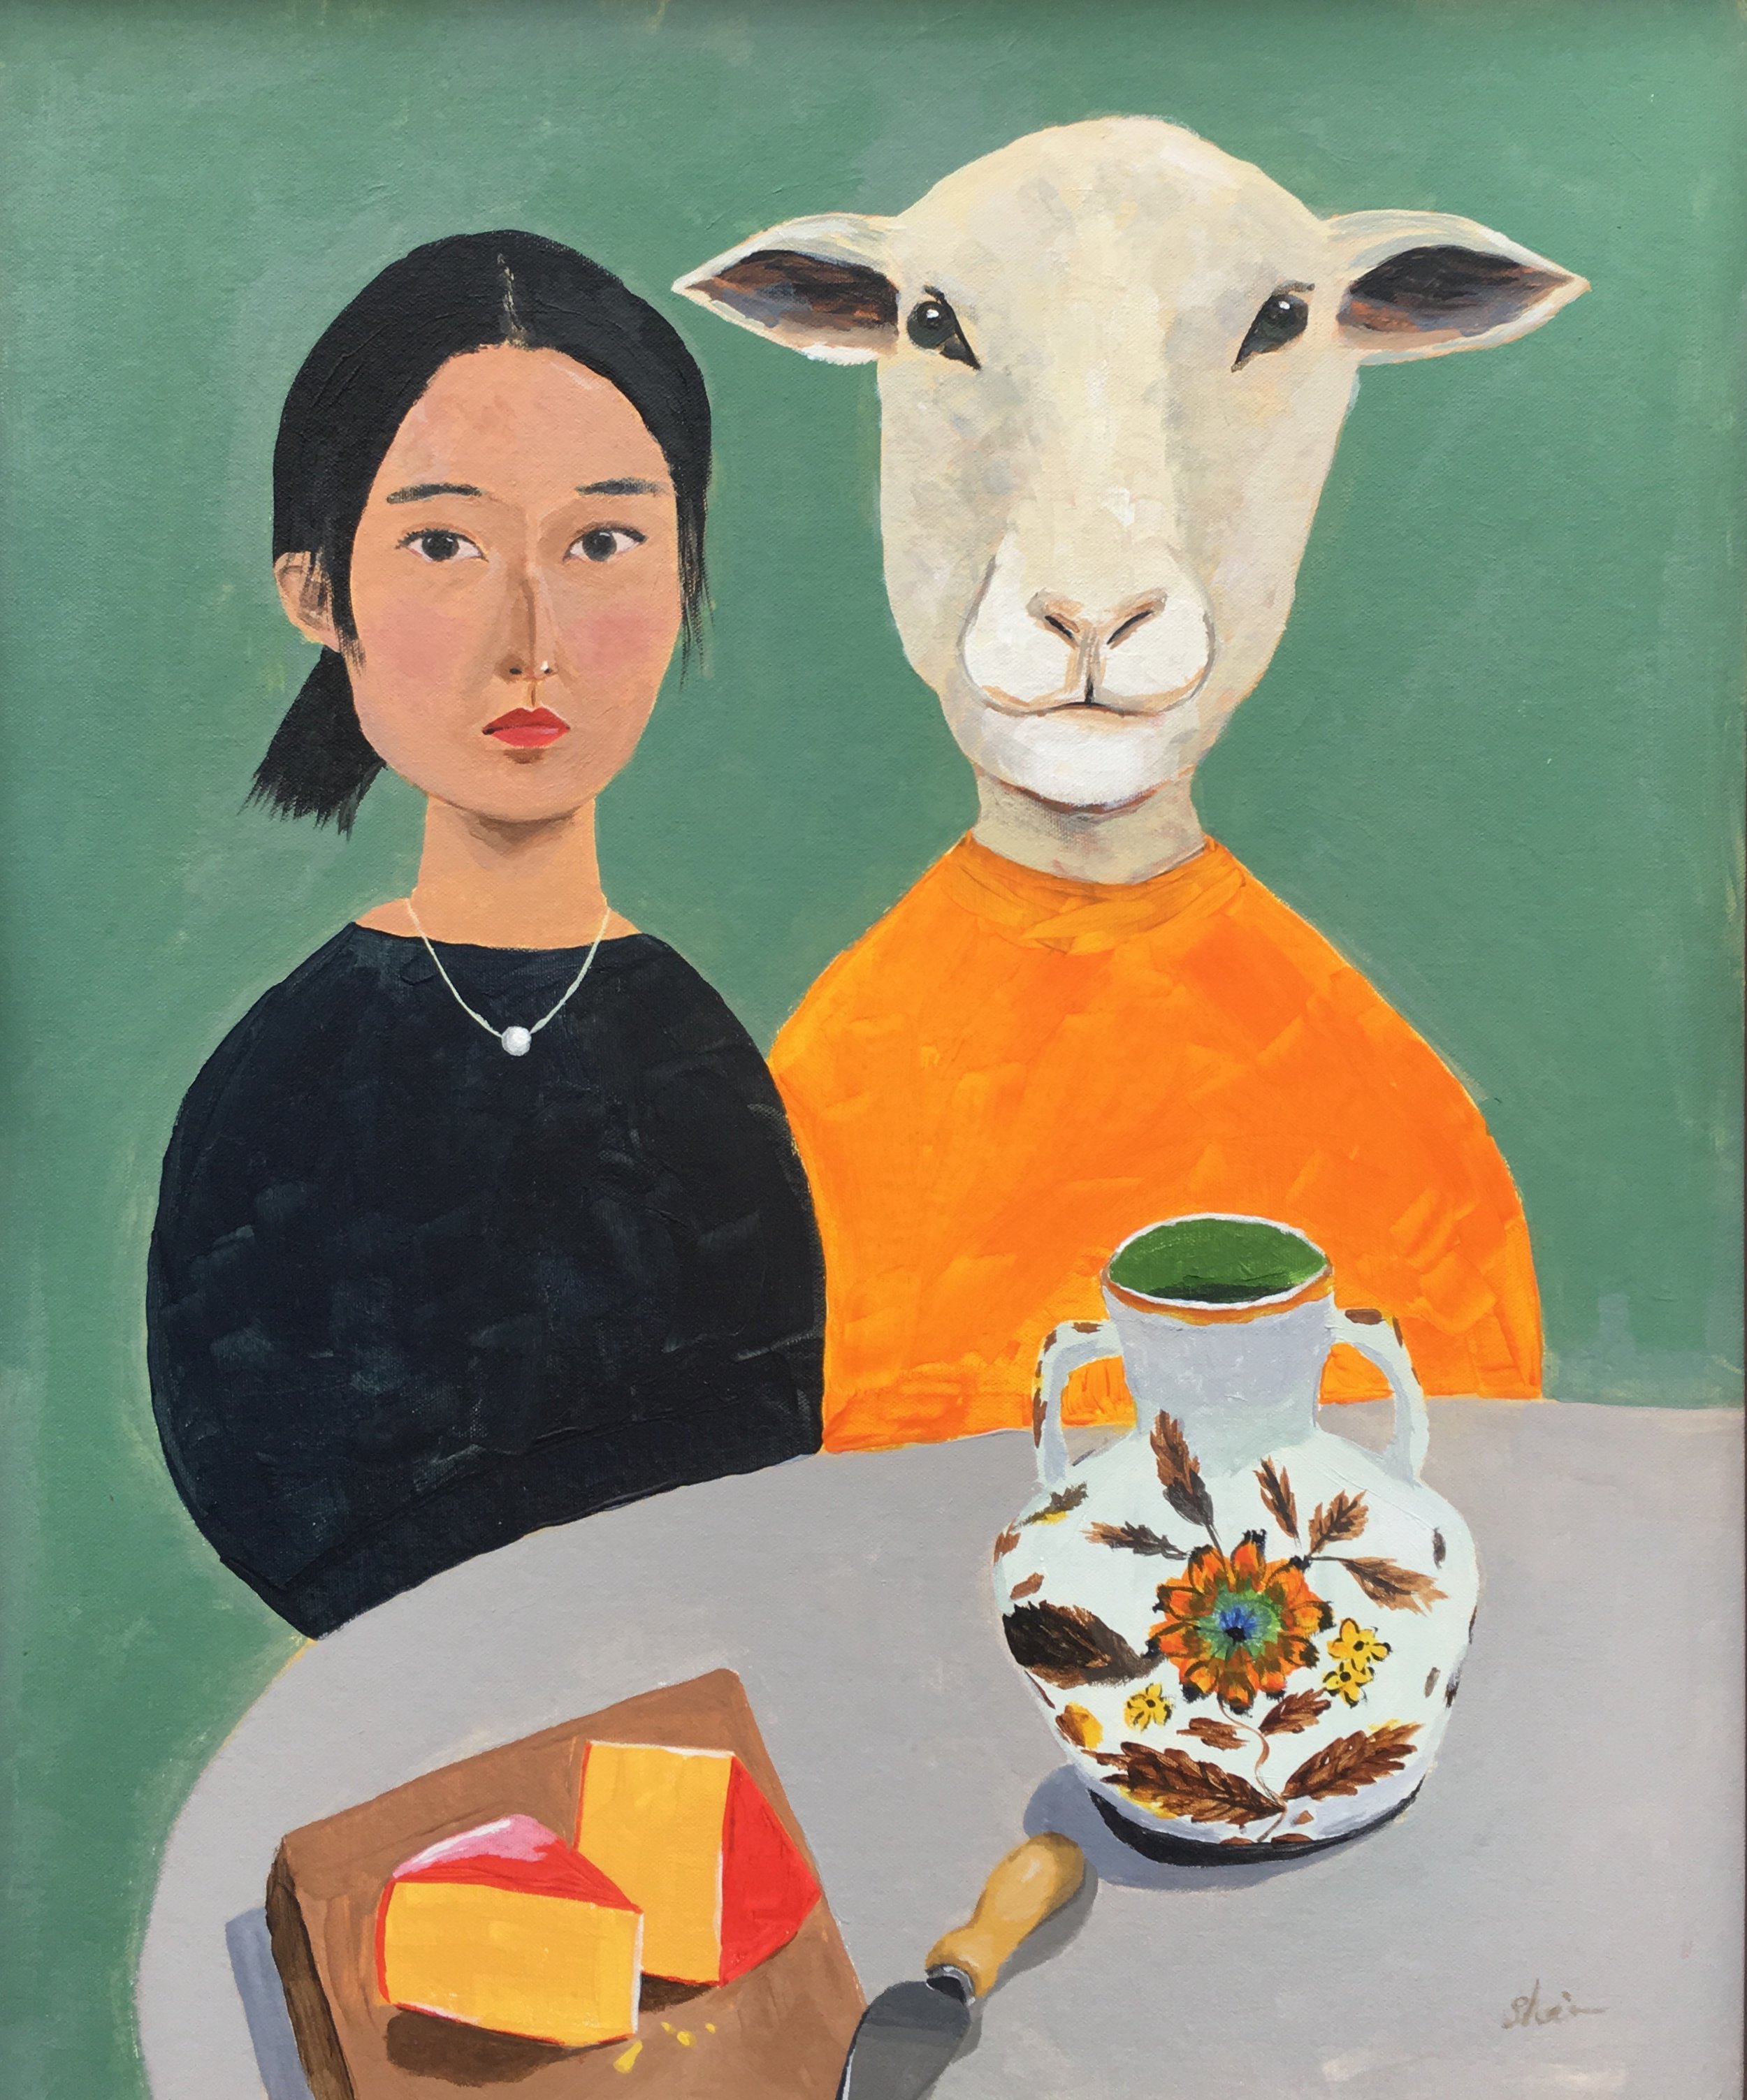 Sheep cheese and me, 2016